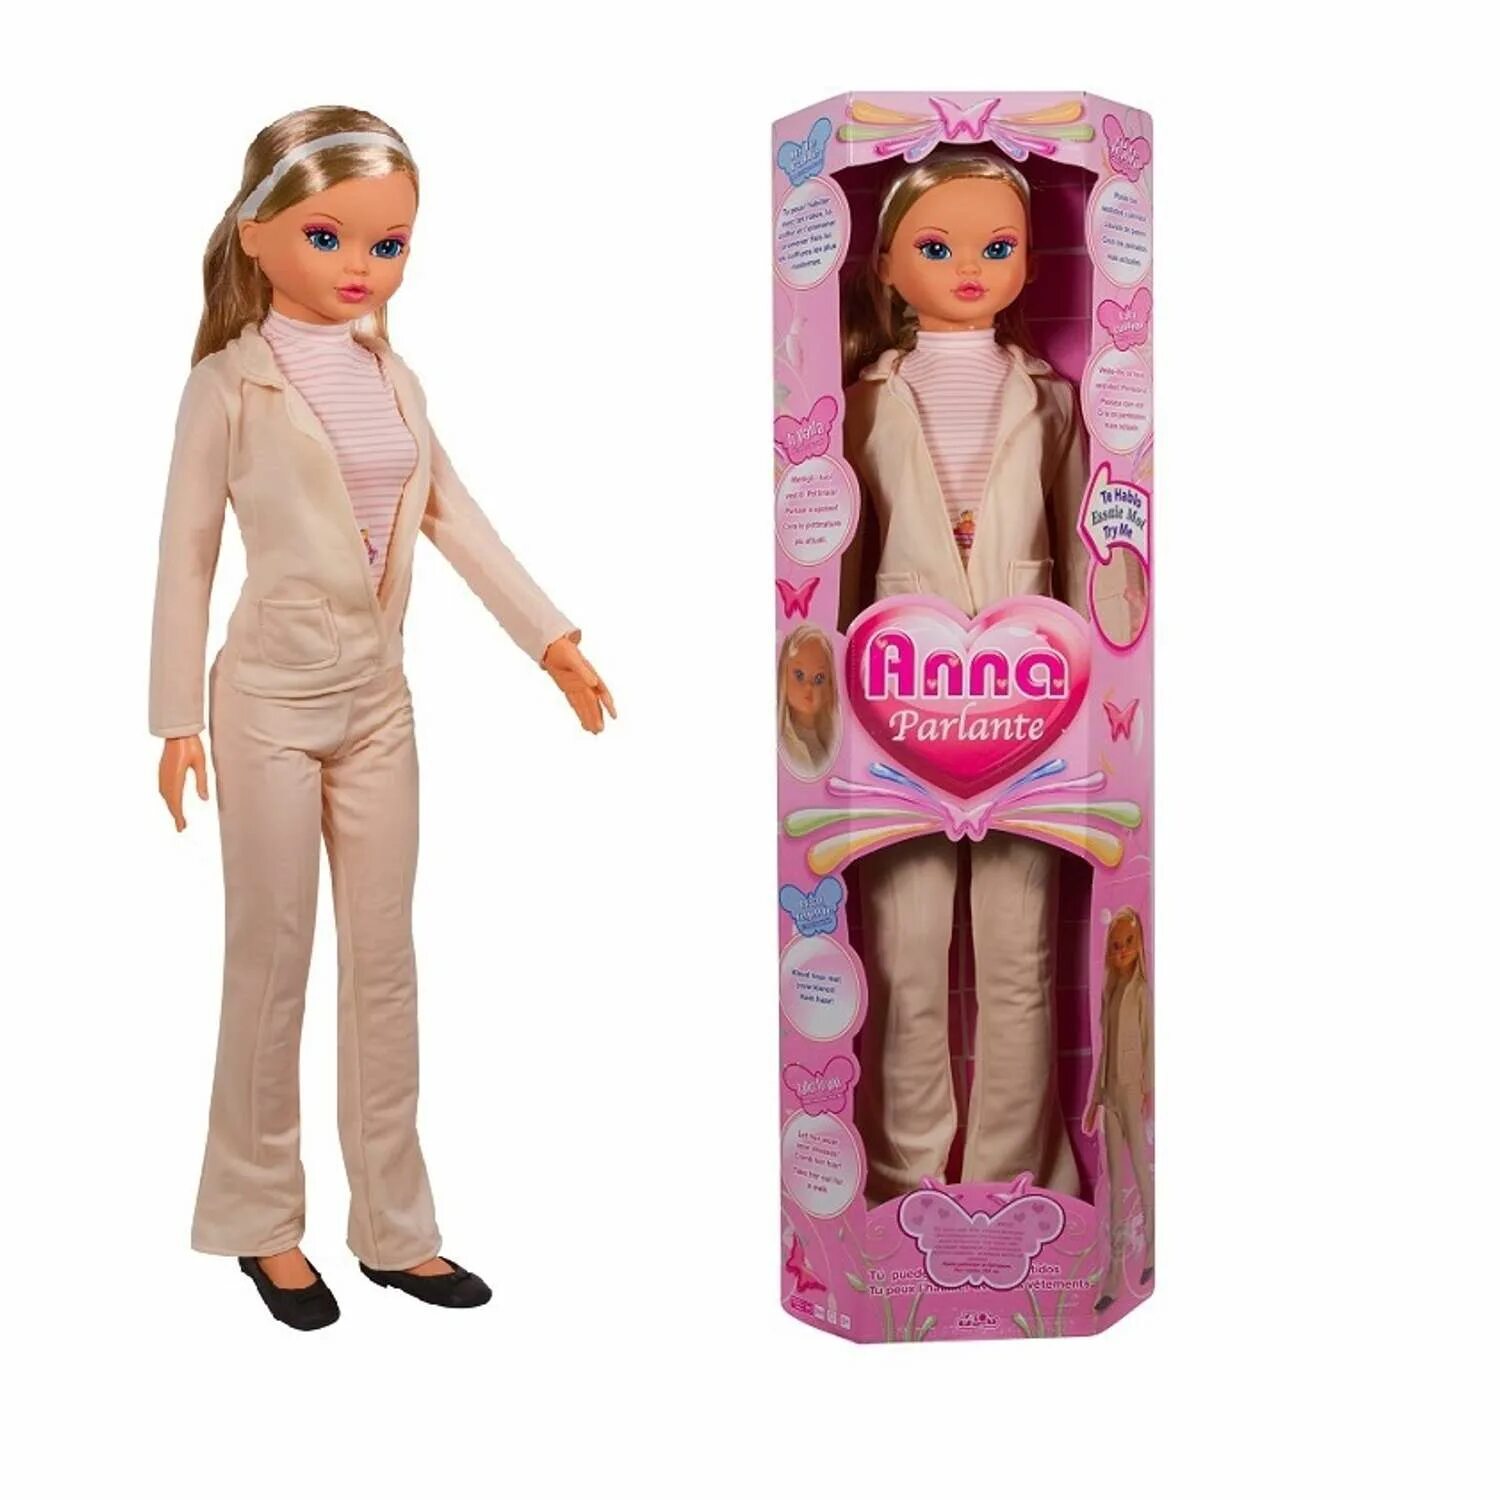 Человек 105 см. Falca (Фалька) кукла 105 см. Falca. Рост 105 см. Дженни. Кукла Falca Дженни звезда 105 см. Falca Jenny Fashion, 105 см, 85005.